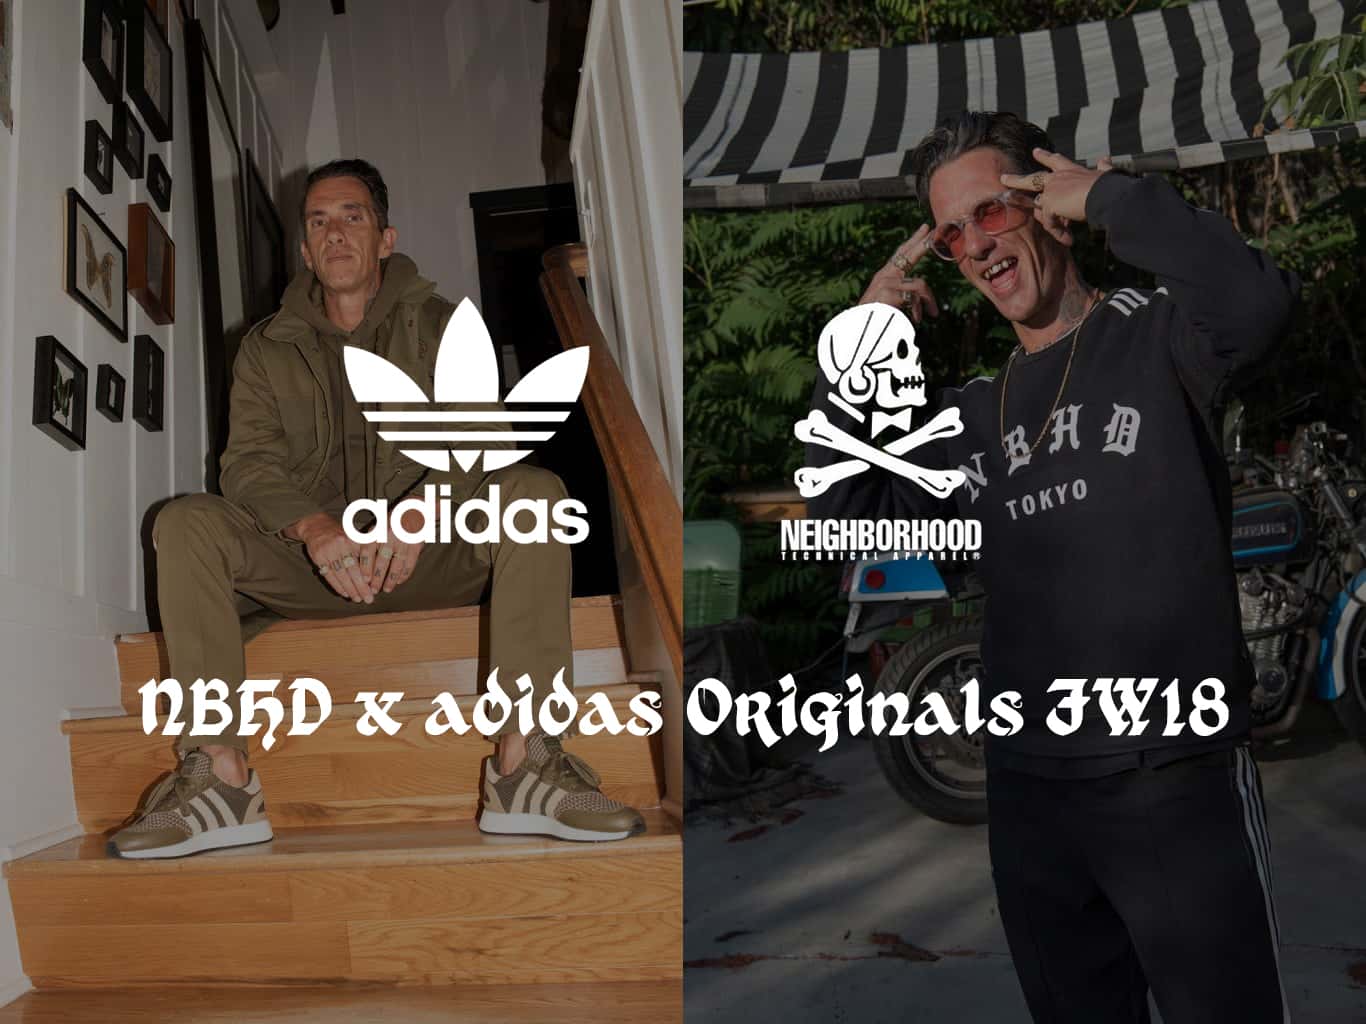 Neighborhood x adidas Originals FW18 with Cali Thornhill DeWitt